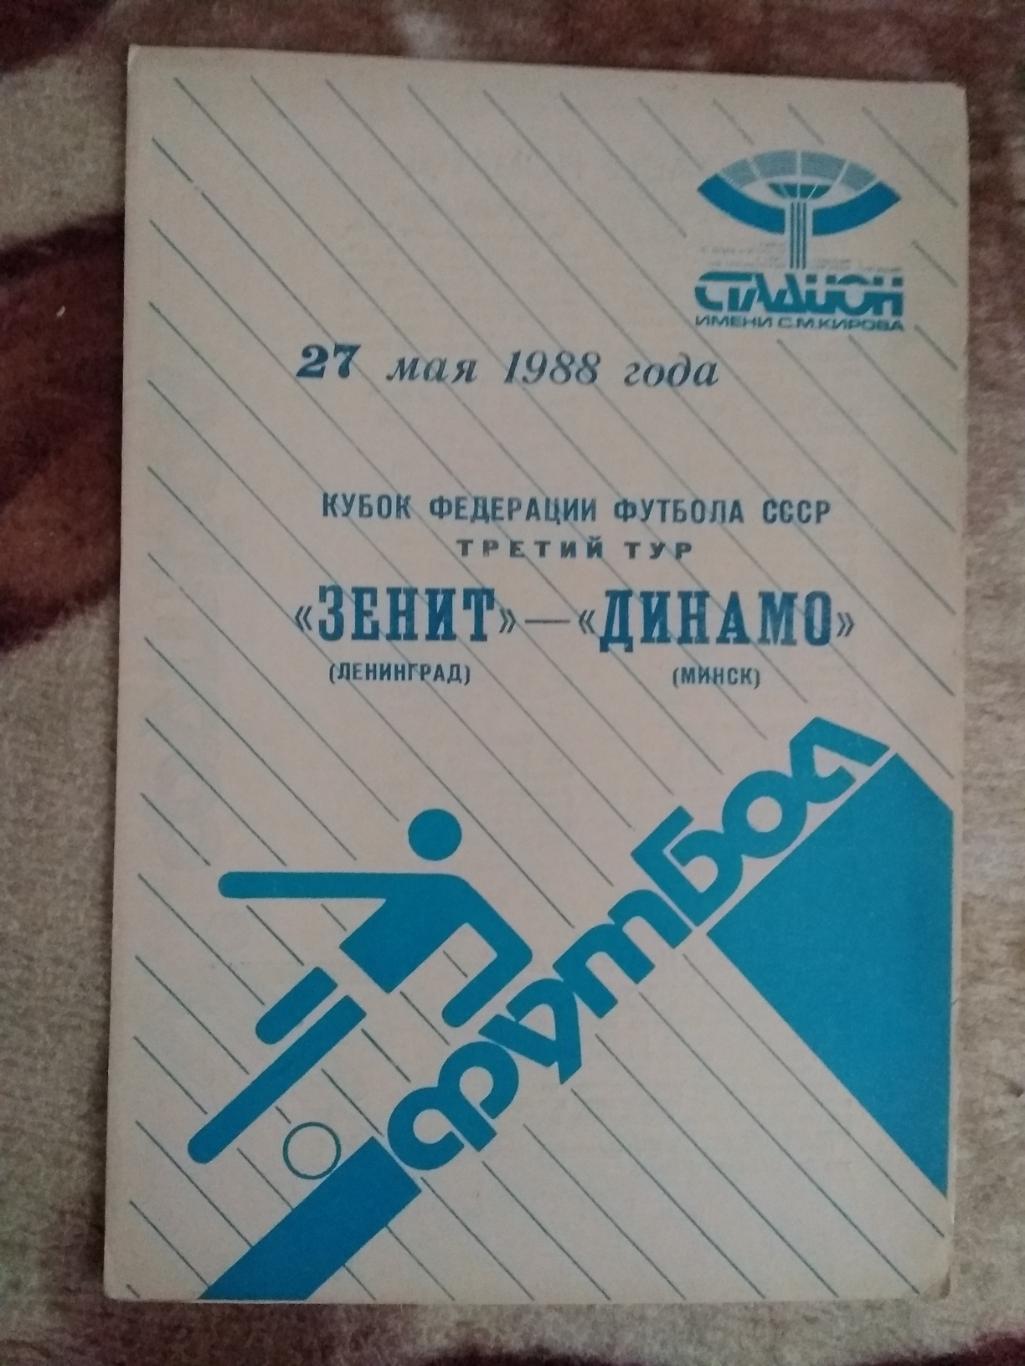 Зенит (Ленинград) - Динамо (Минск).Кубок Федерации футбола СССР 27.05.1988.